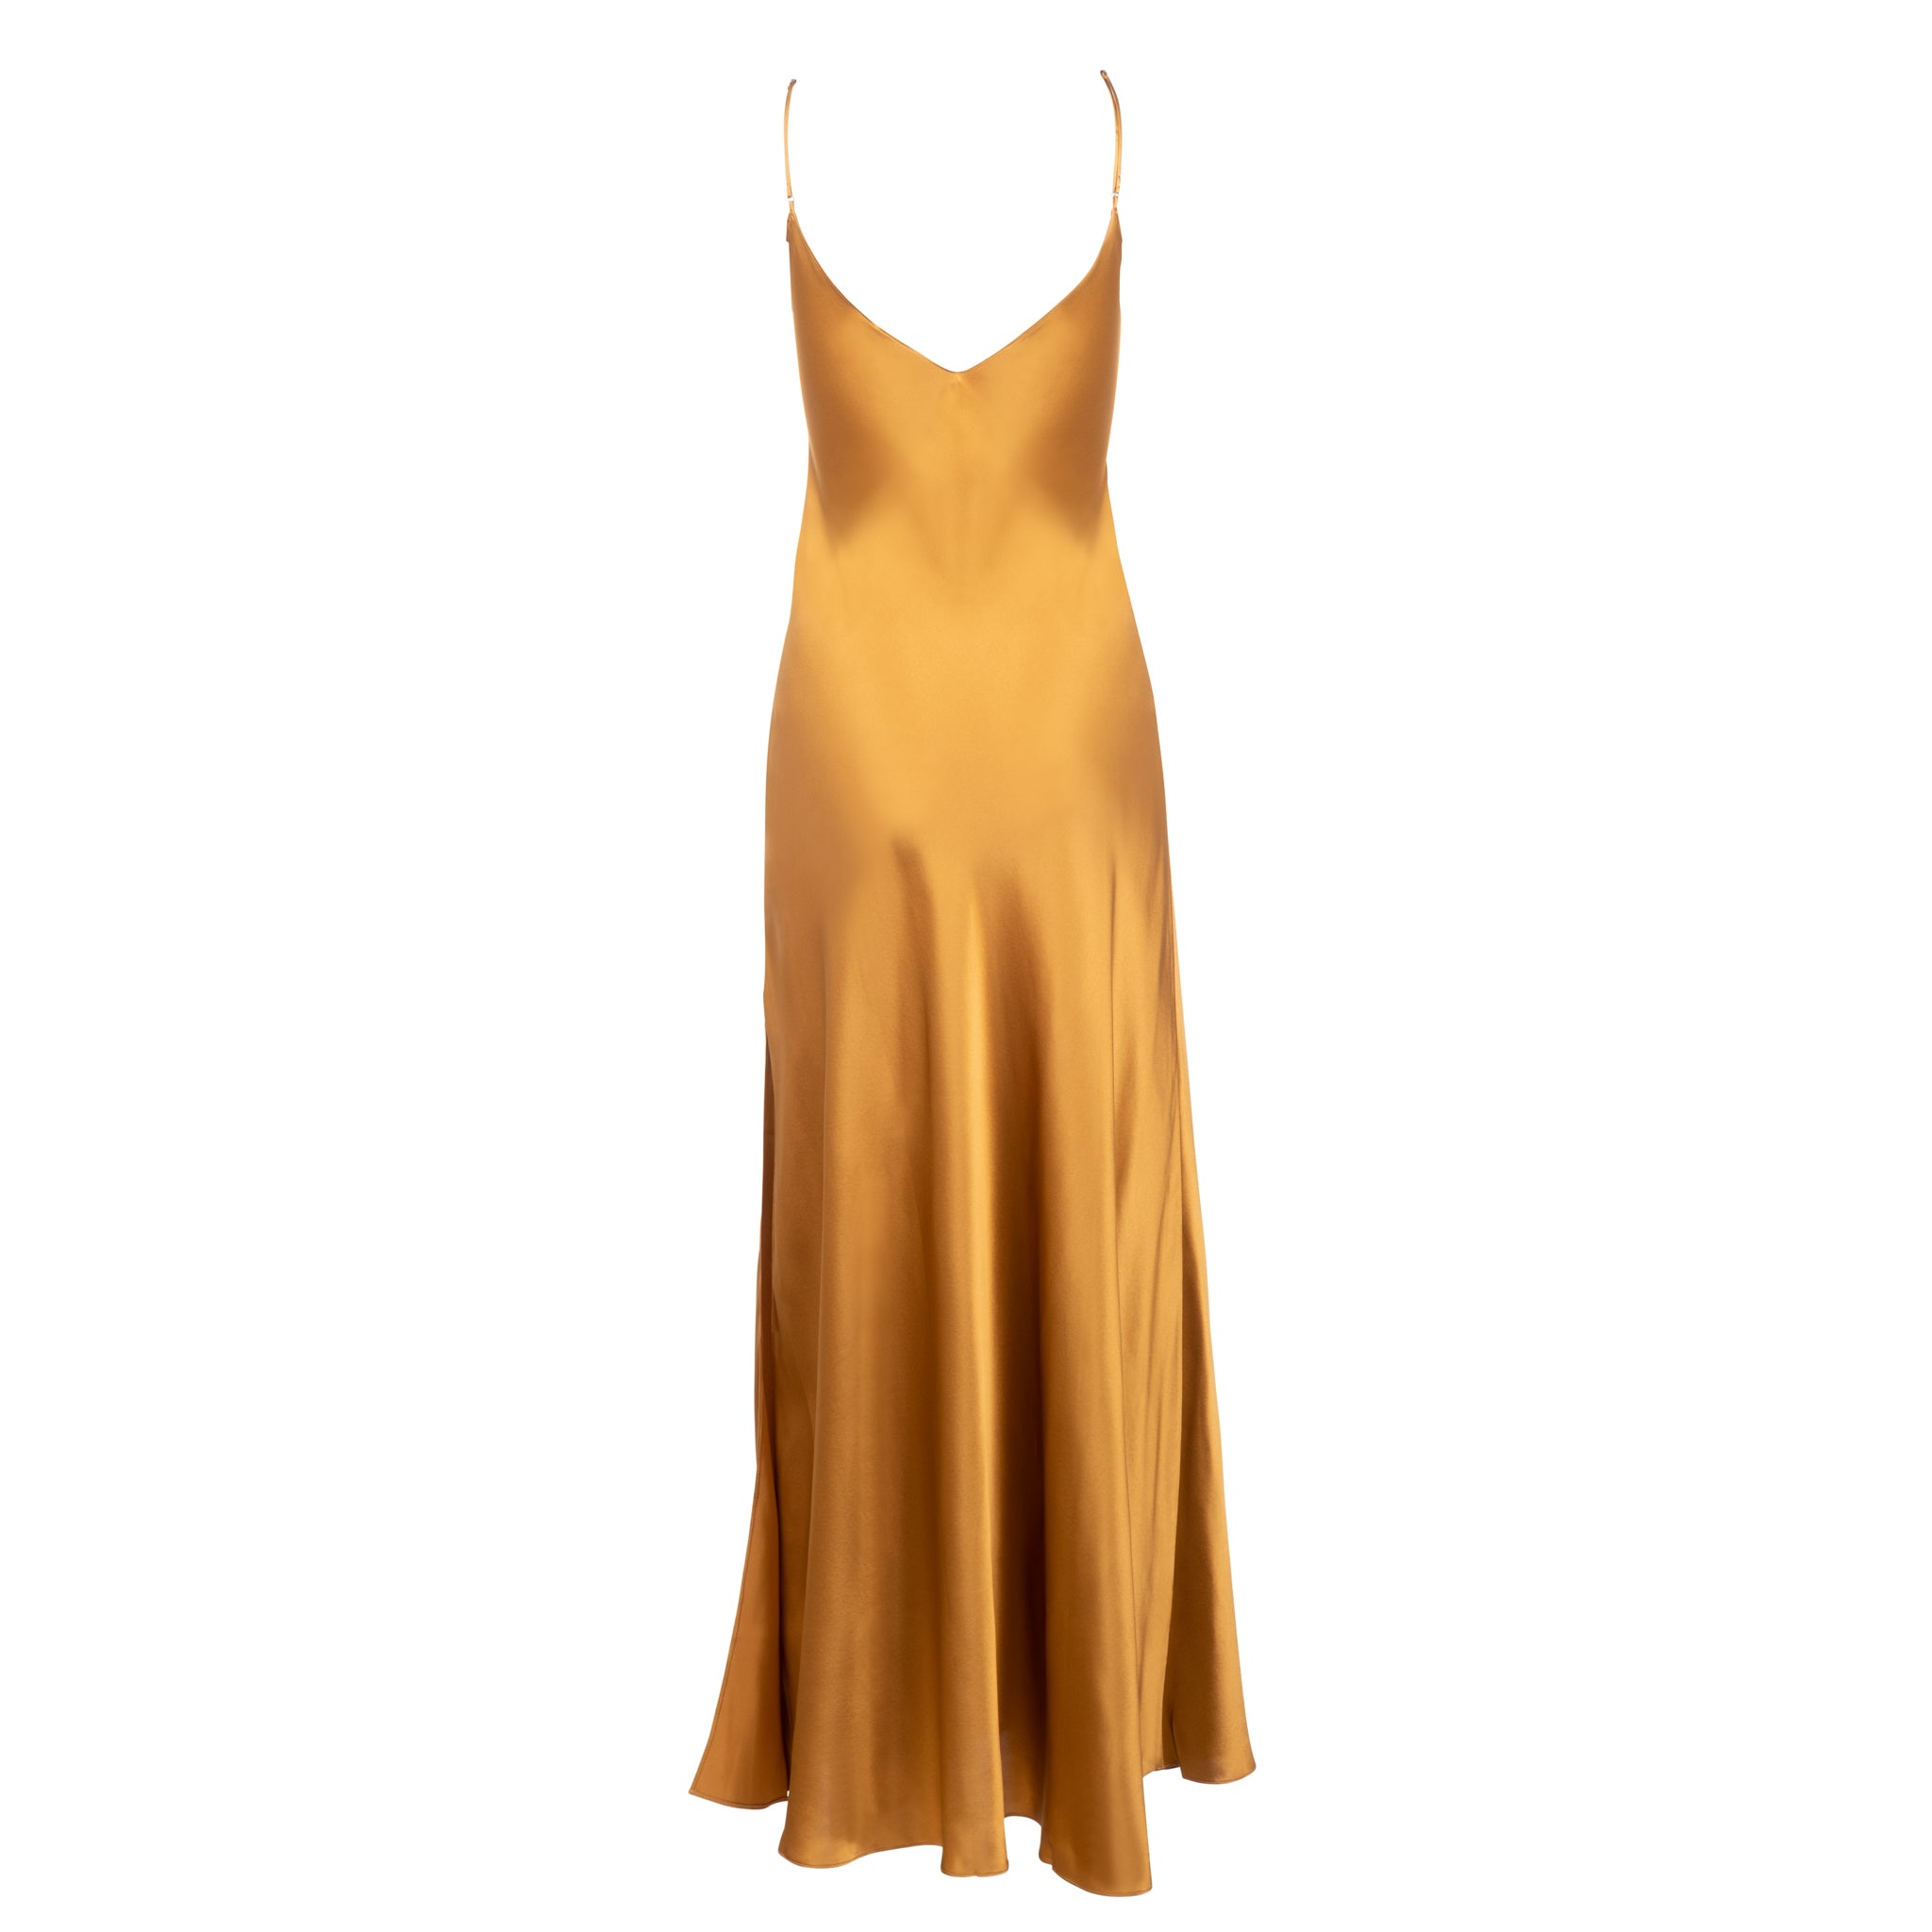 Buy Champagne Gold Maternity Satin Slip Dress from Next Germany